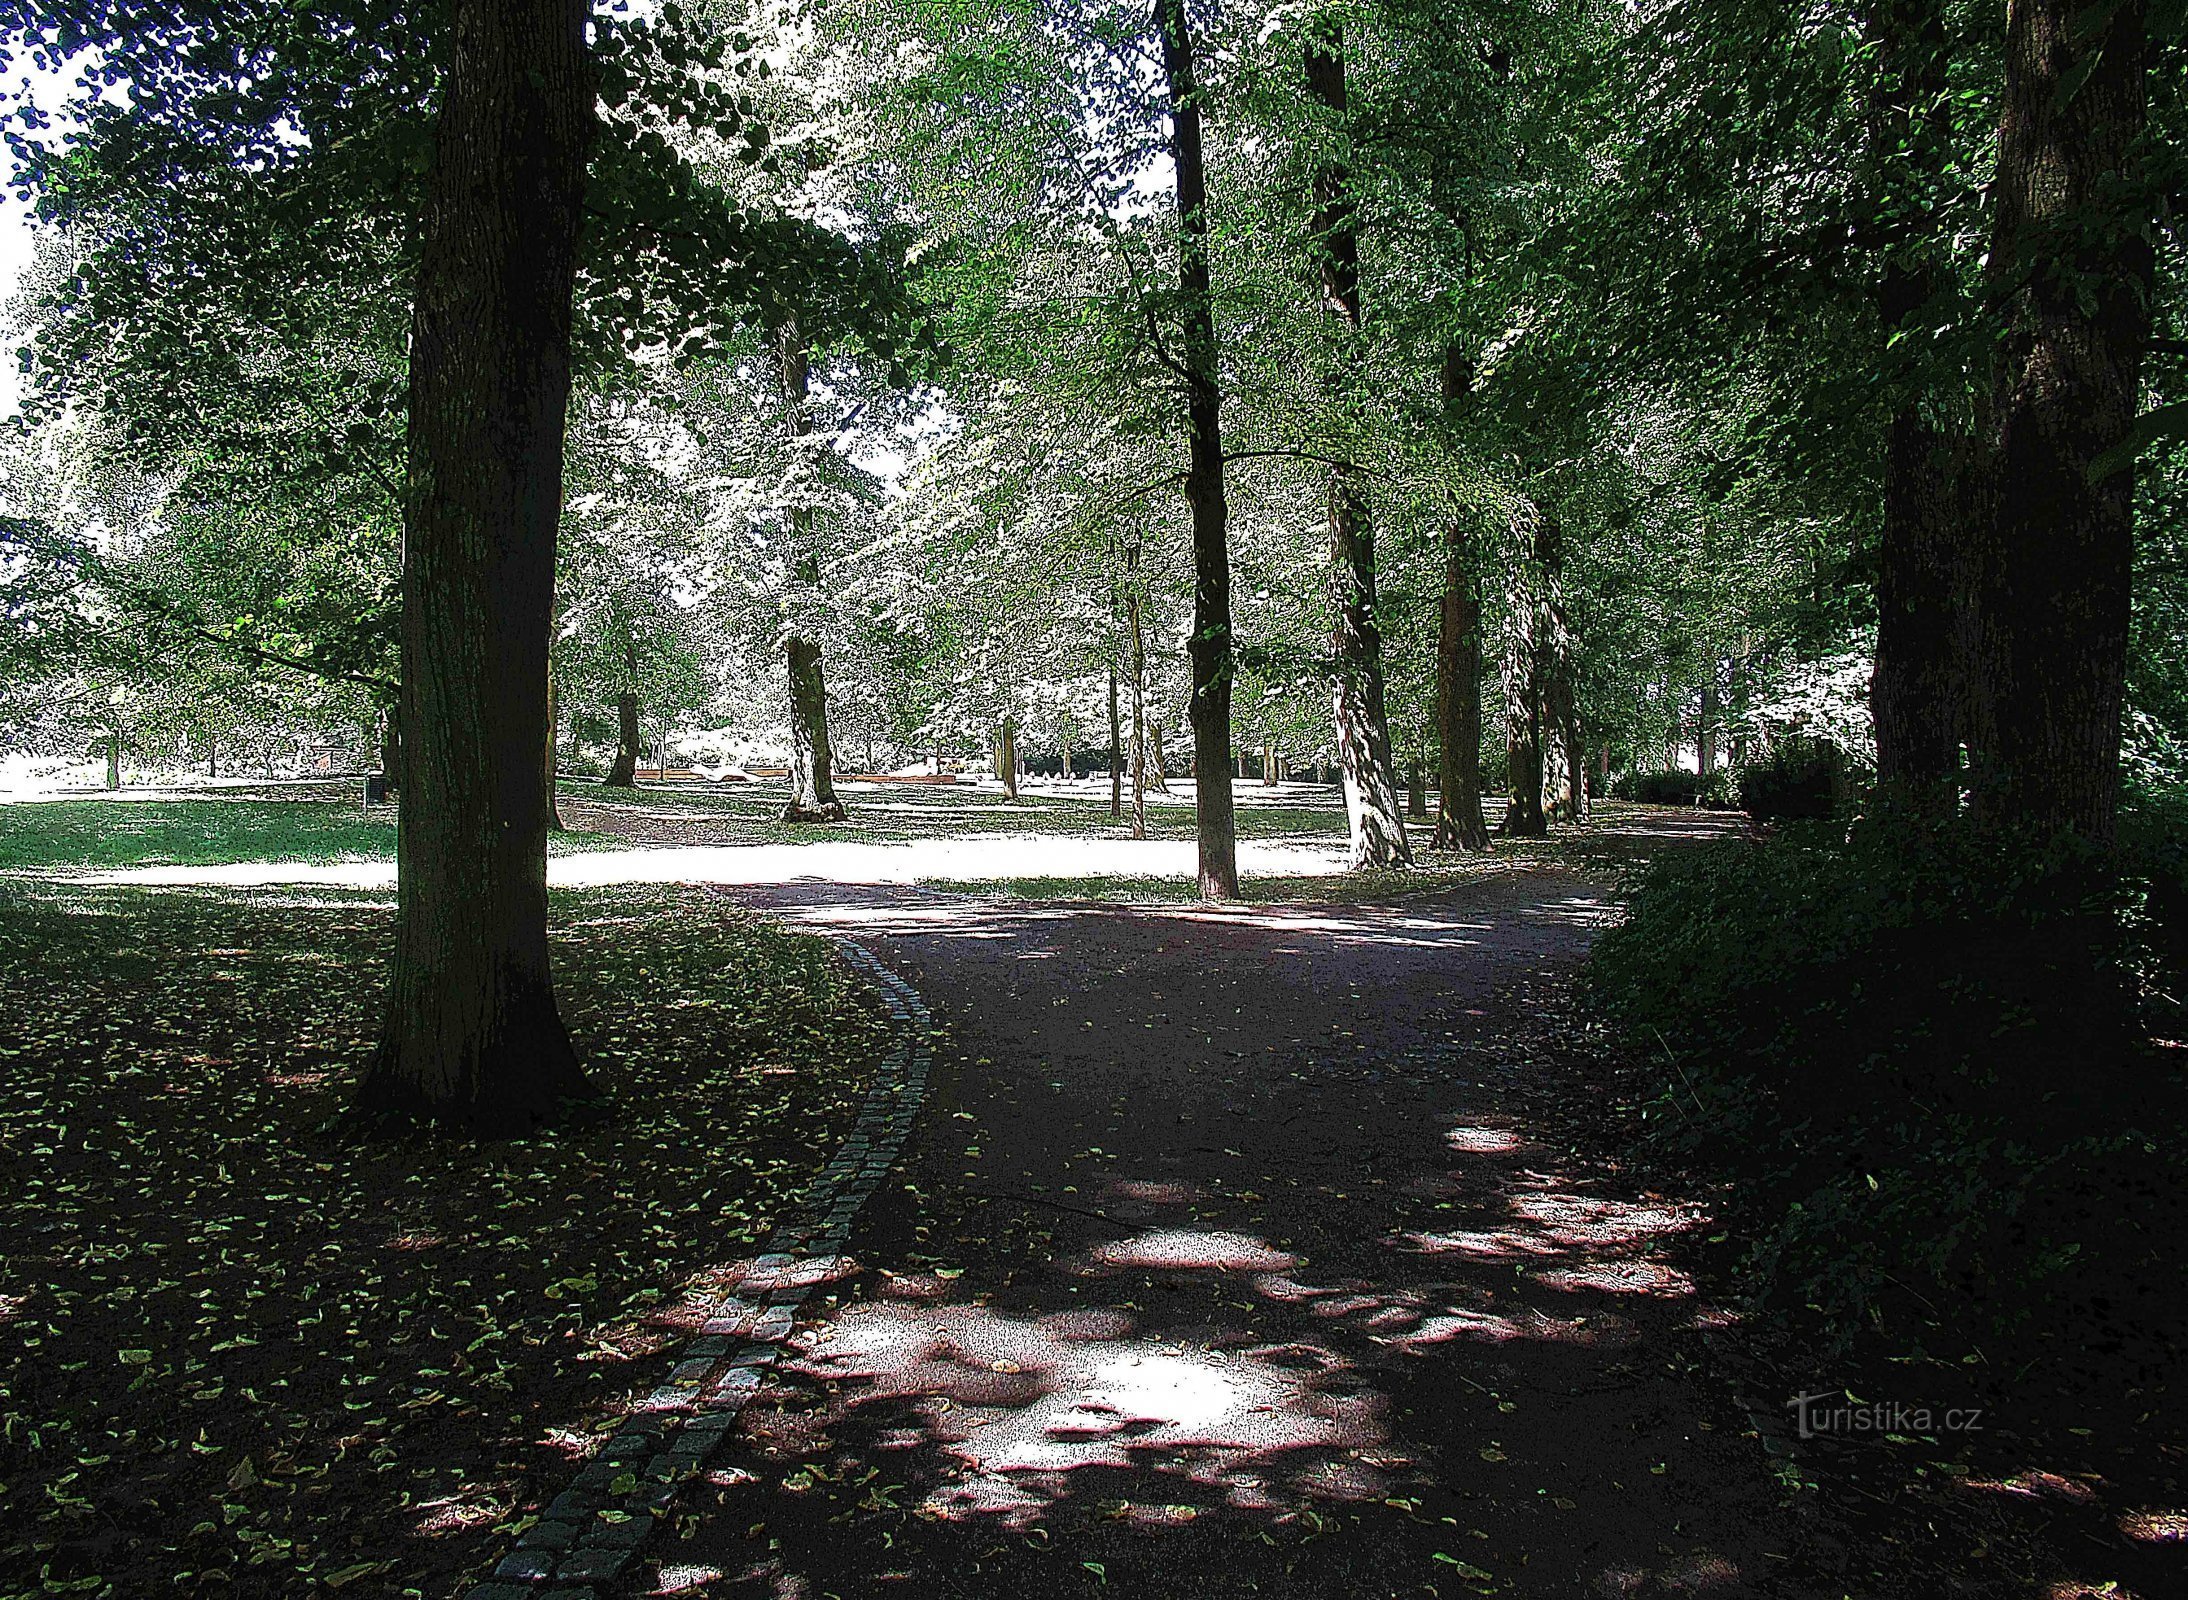 Stadtpark Jan Palach in Zwittau